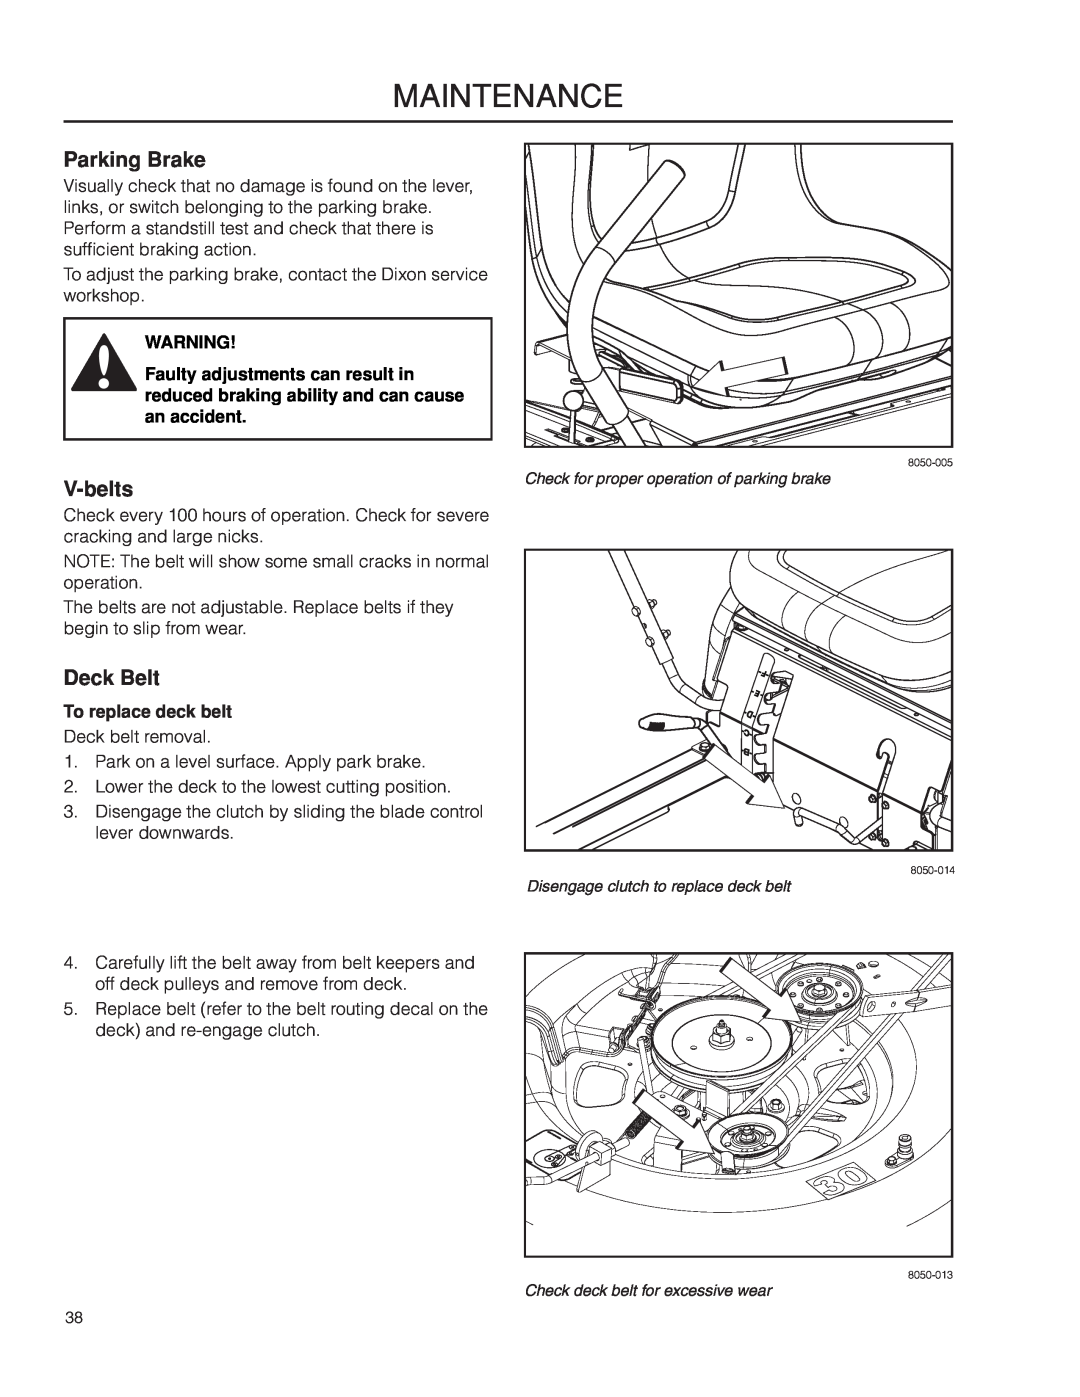 Dixon 966043101, SPDZTR 30 BF, 966064401 manual V-belts, Deck Belt, Maintenance, Parking Brake, To replace deck belt 